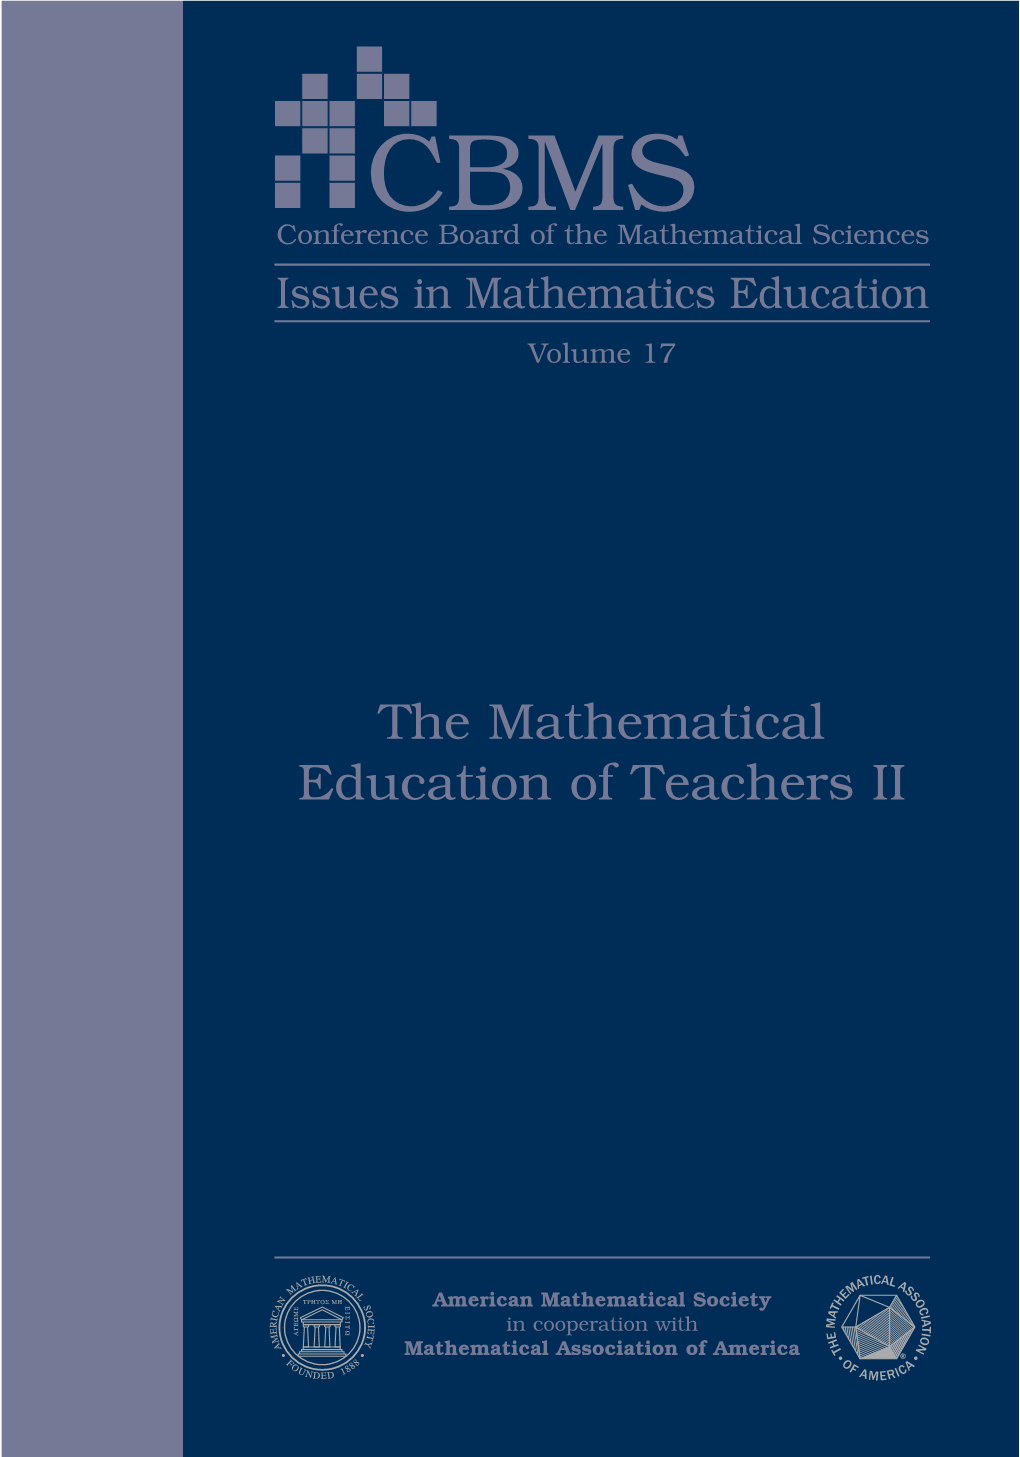 The Mathematical Education of Teachers II